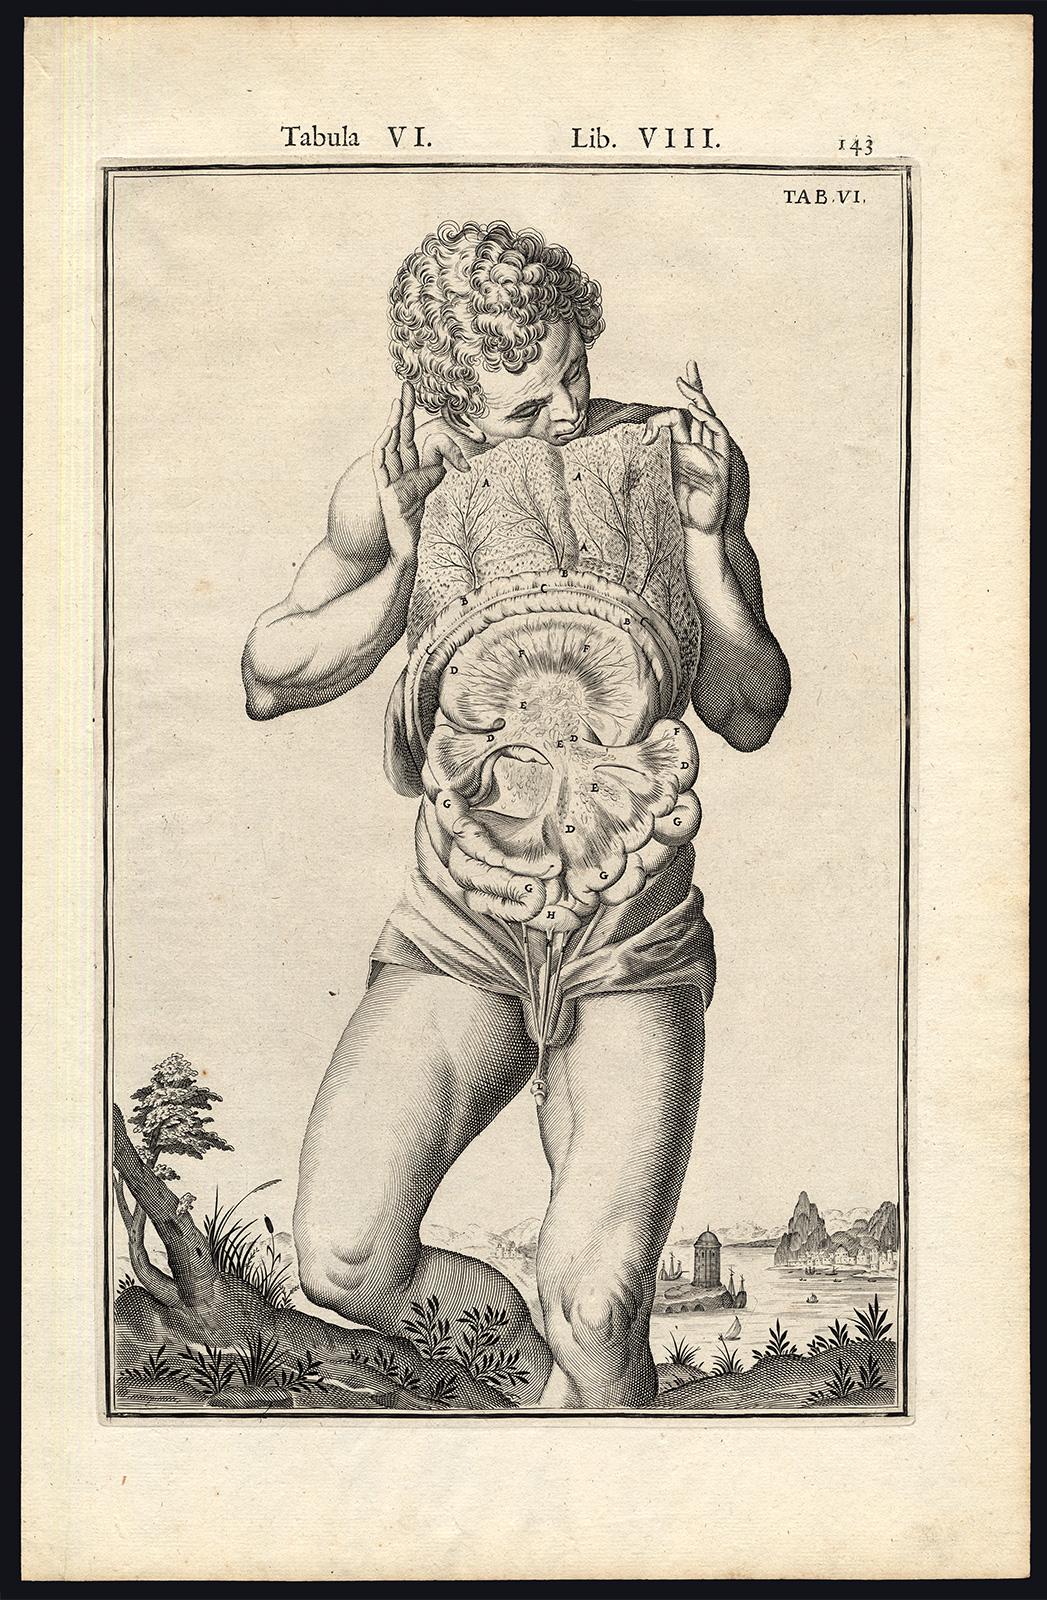 Adrianus Spigelius Print - 2 anatomical prints - Male abdominal cavity by Spigelius - Engraving - 17th c.